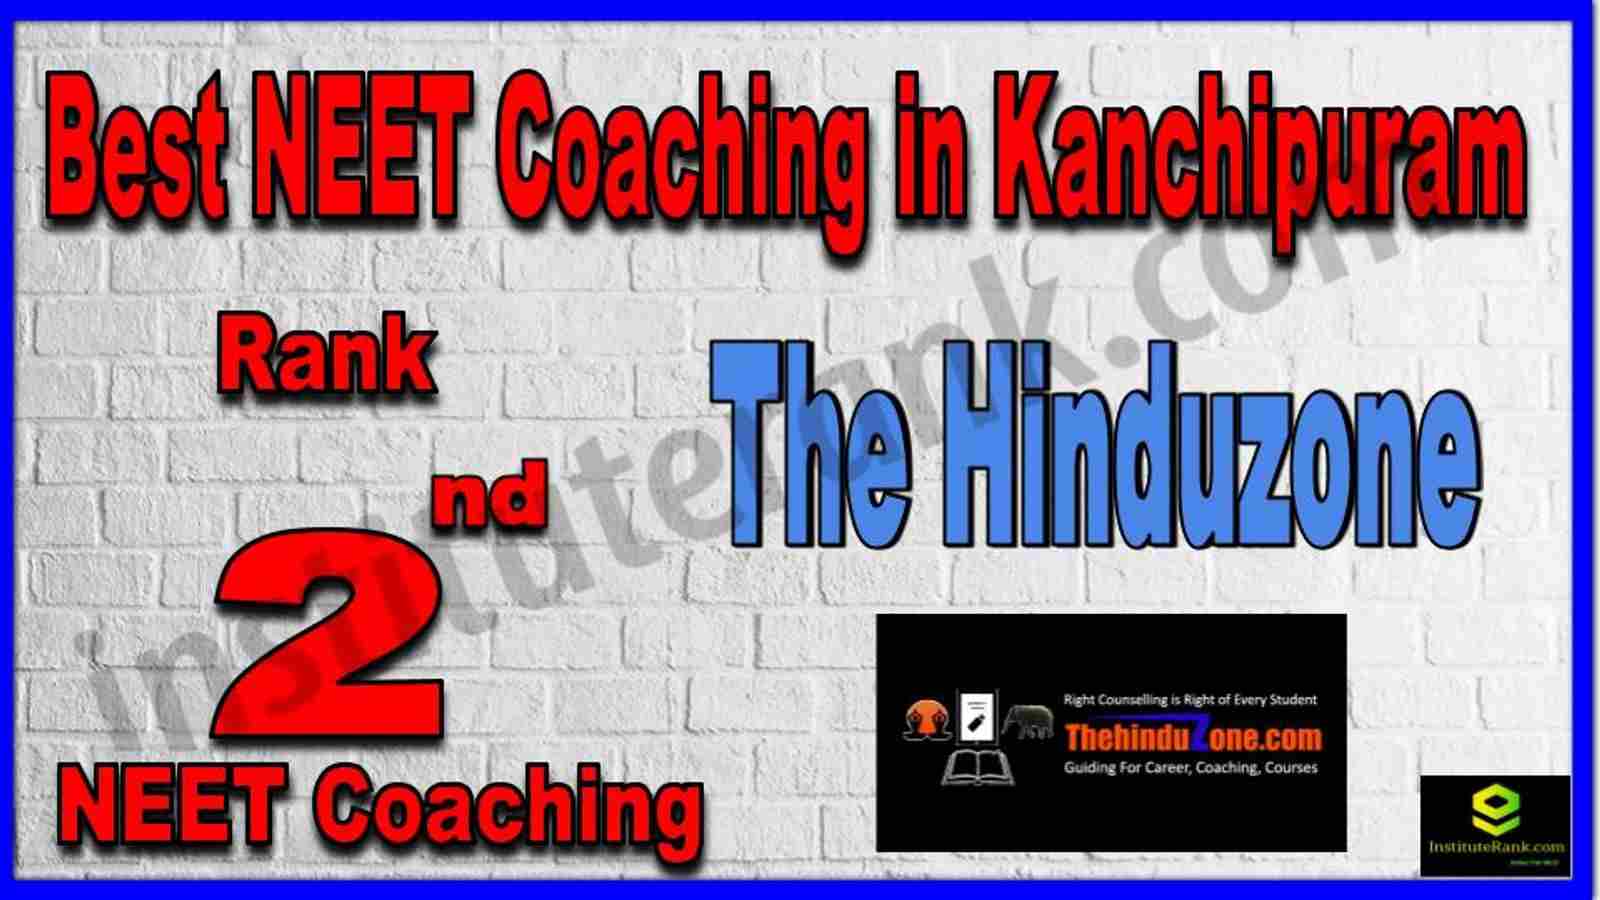 Rank 2nd Best NEET Coaching in Kanchipuram